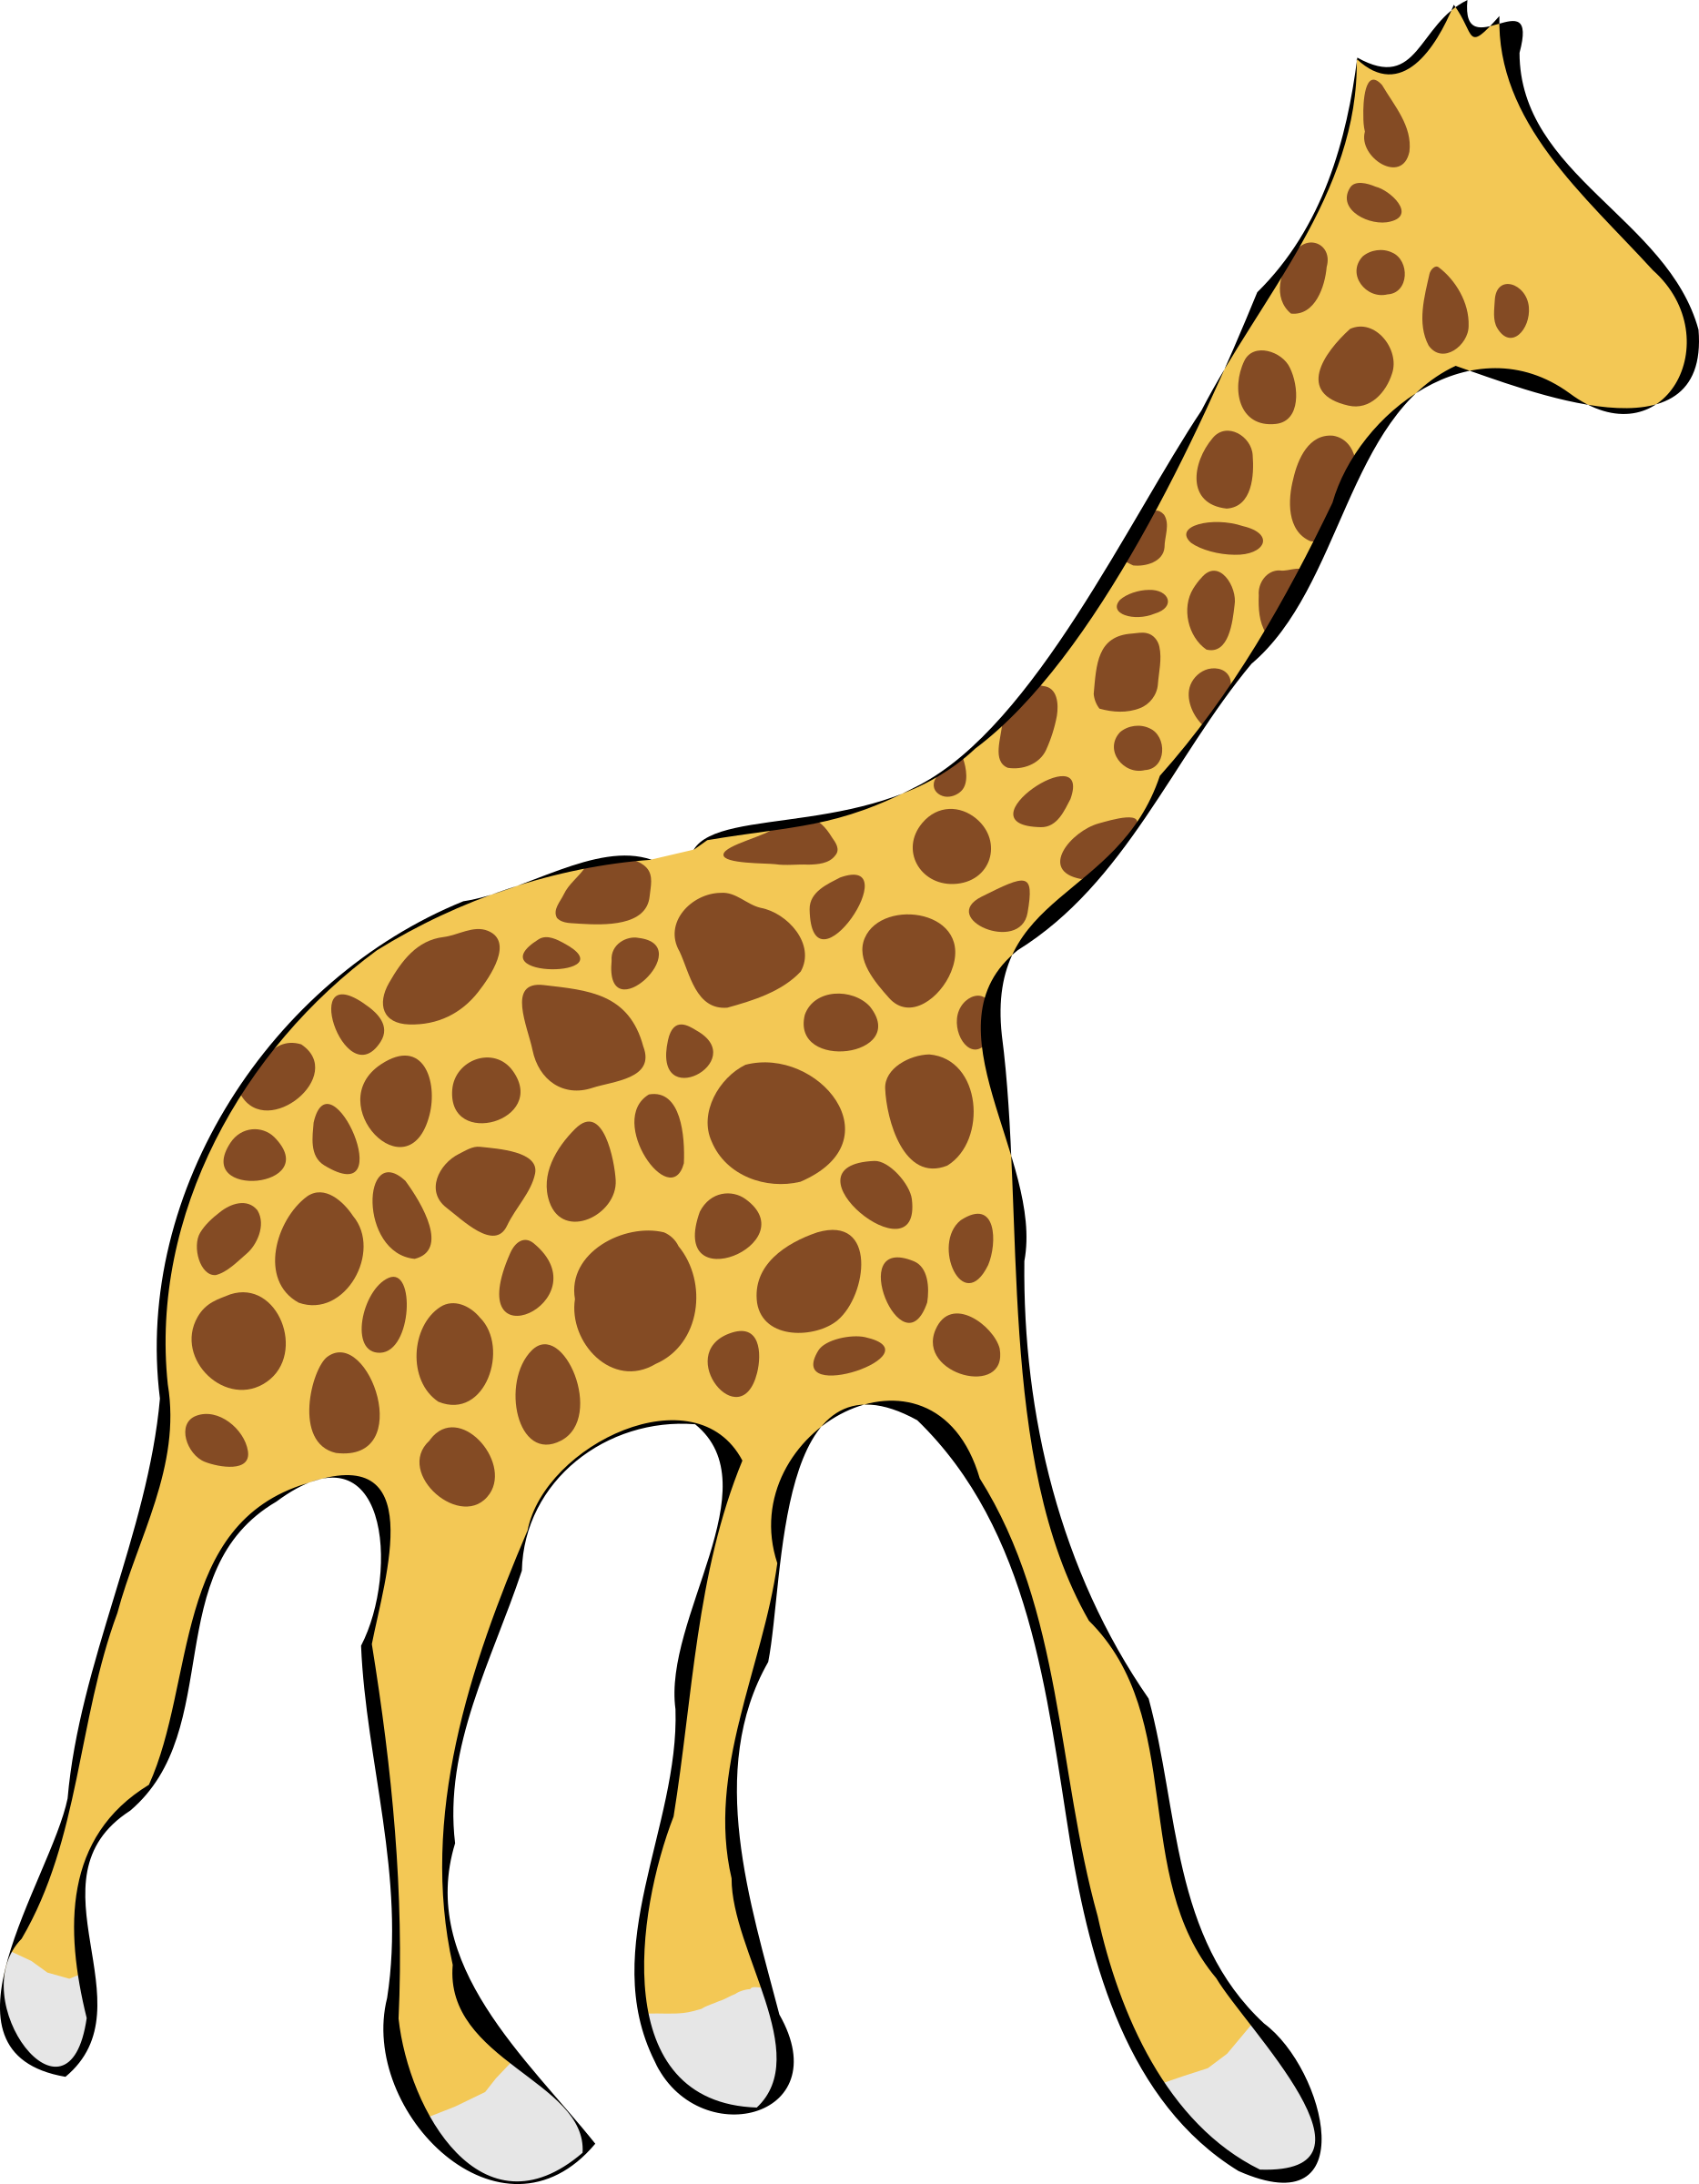 Giraffe Svg Clip Arts - Giraffe Free Clipart, Hd Png Download